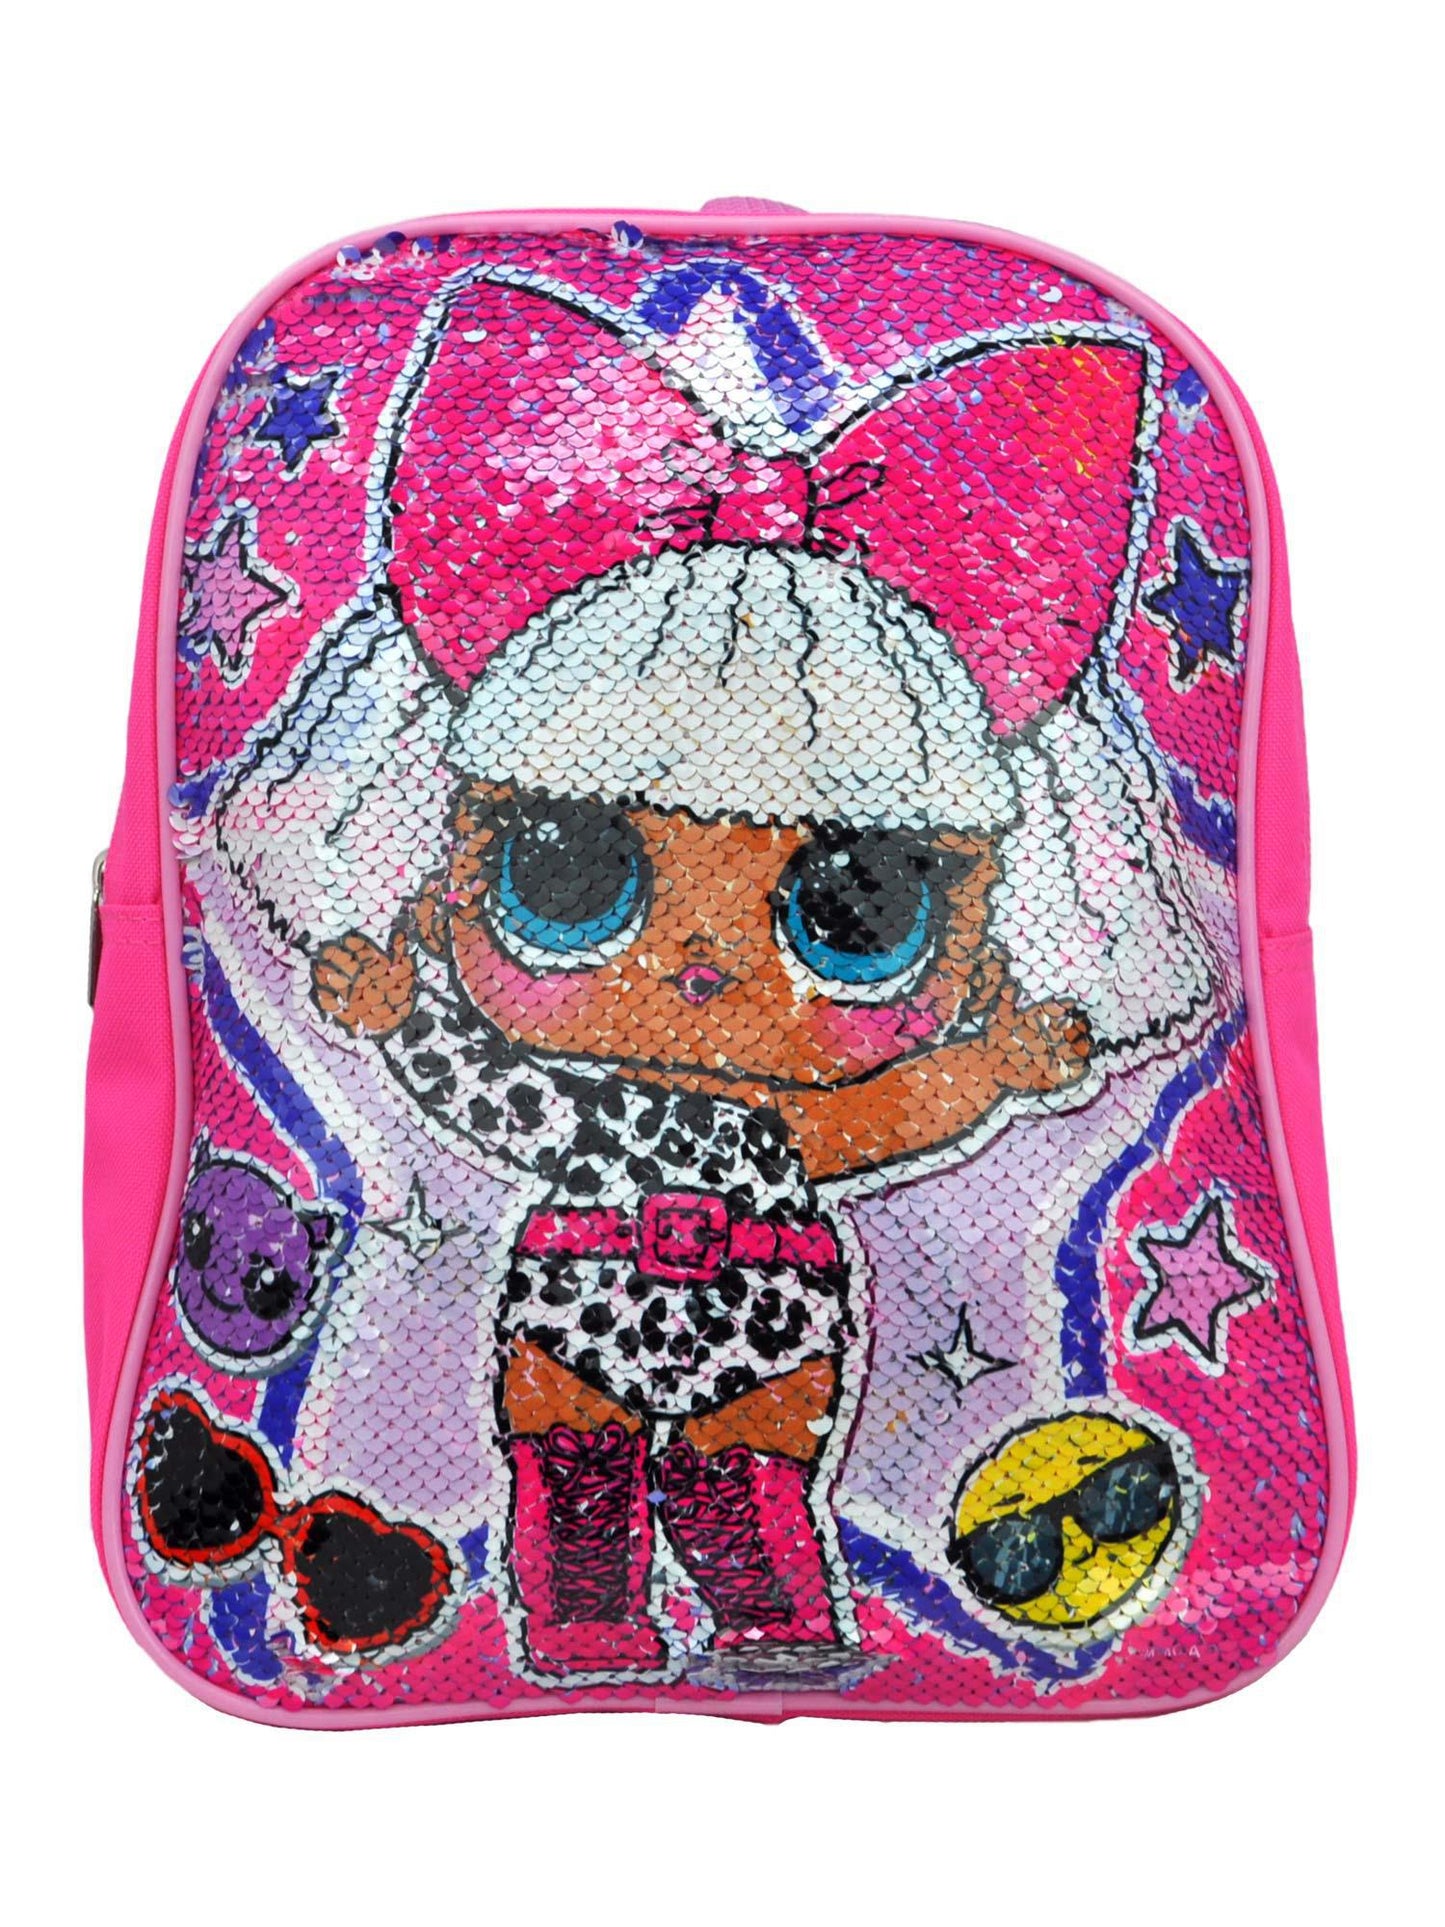 LOL Surprise! Girls 12" Backpack Reversible Sequins Pink